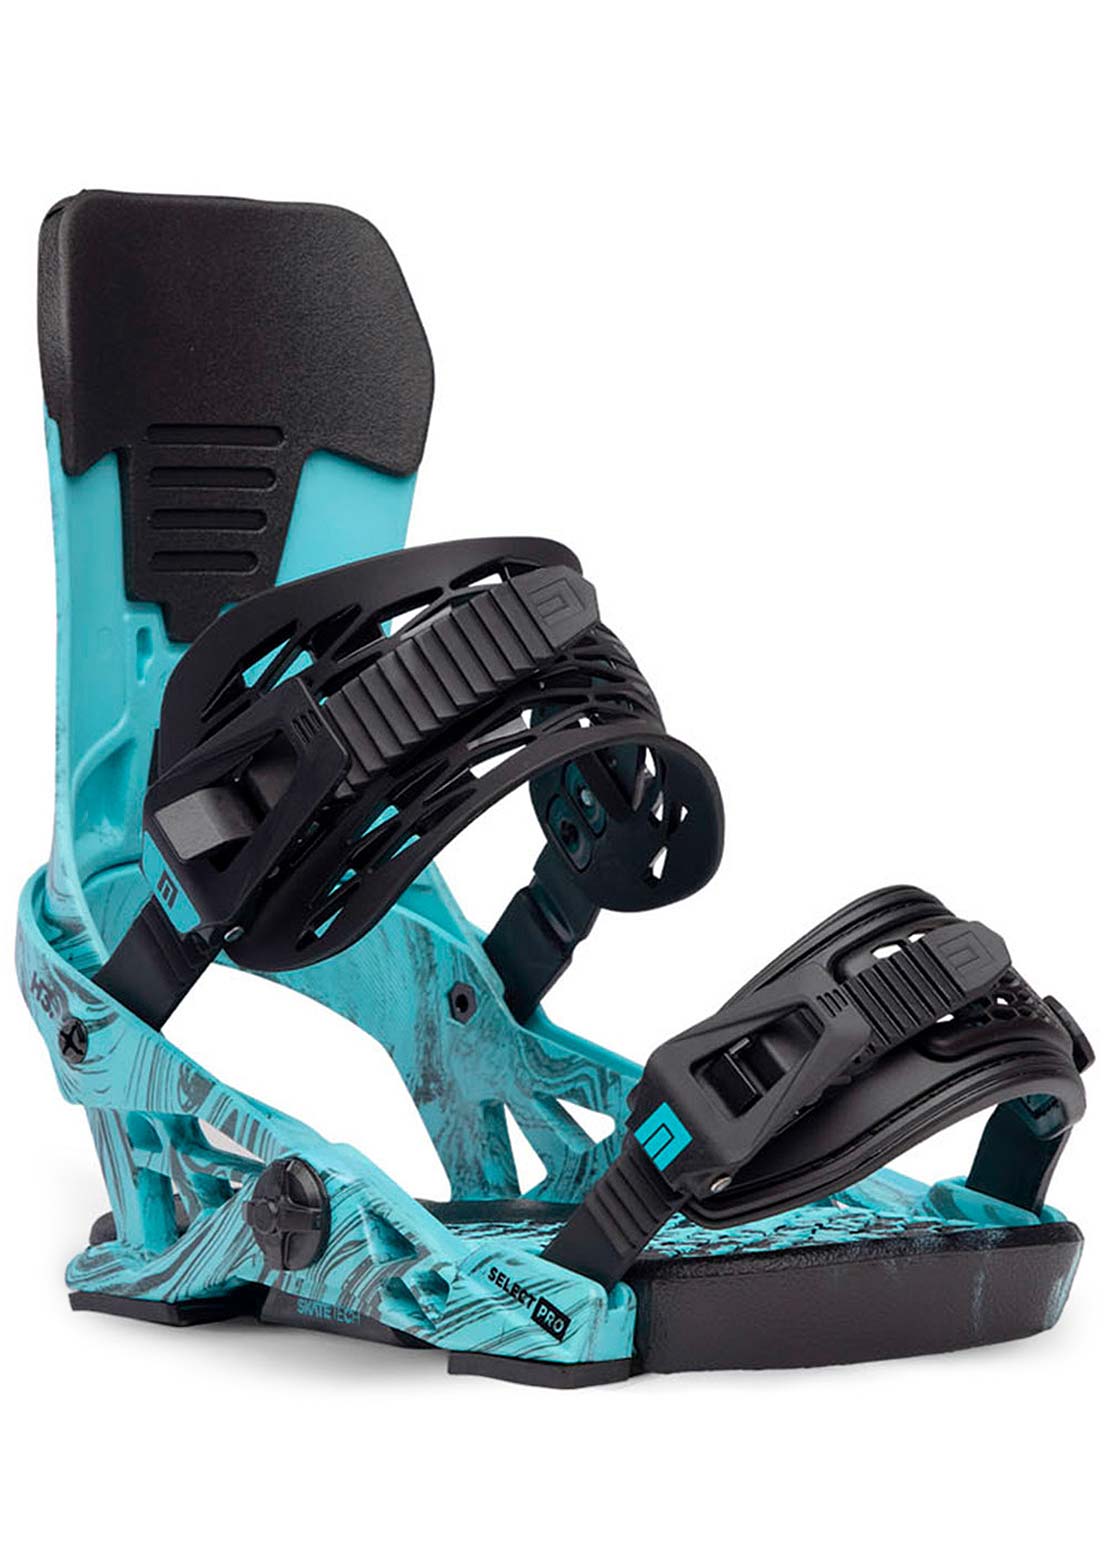 NOW Select Pro Ltd Snowboard Binding Aqua Swirl